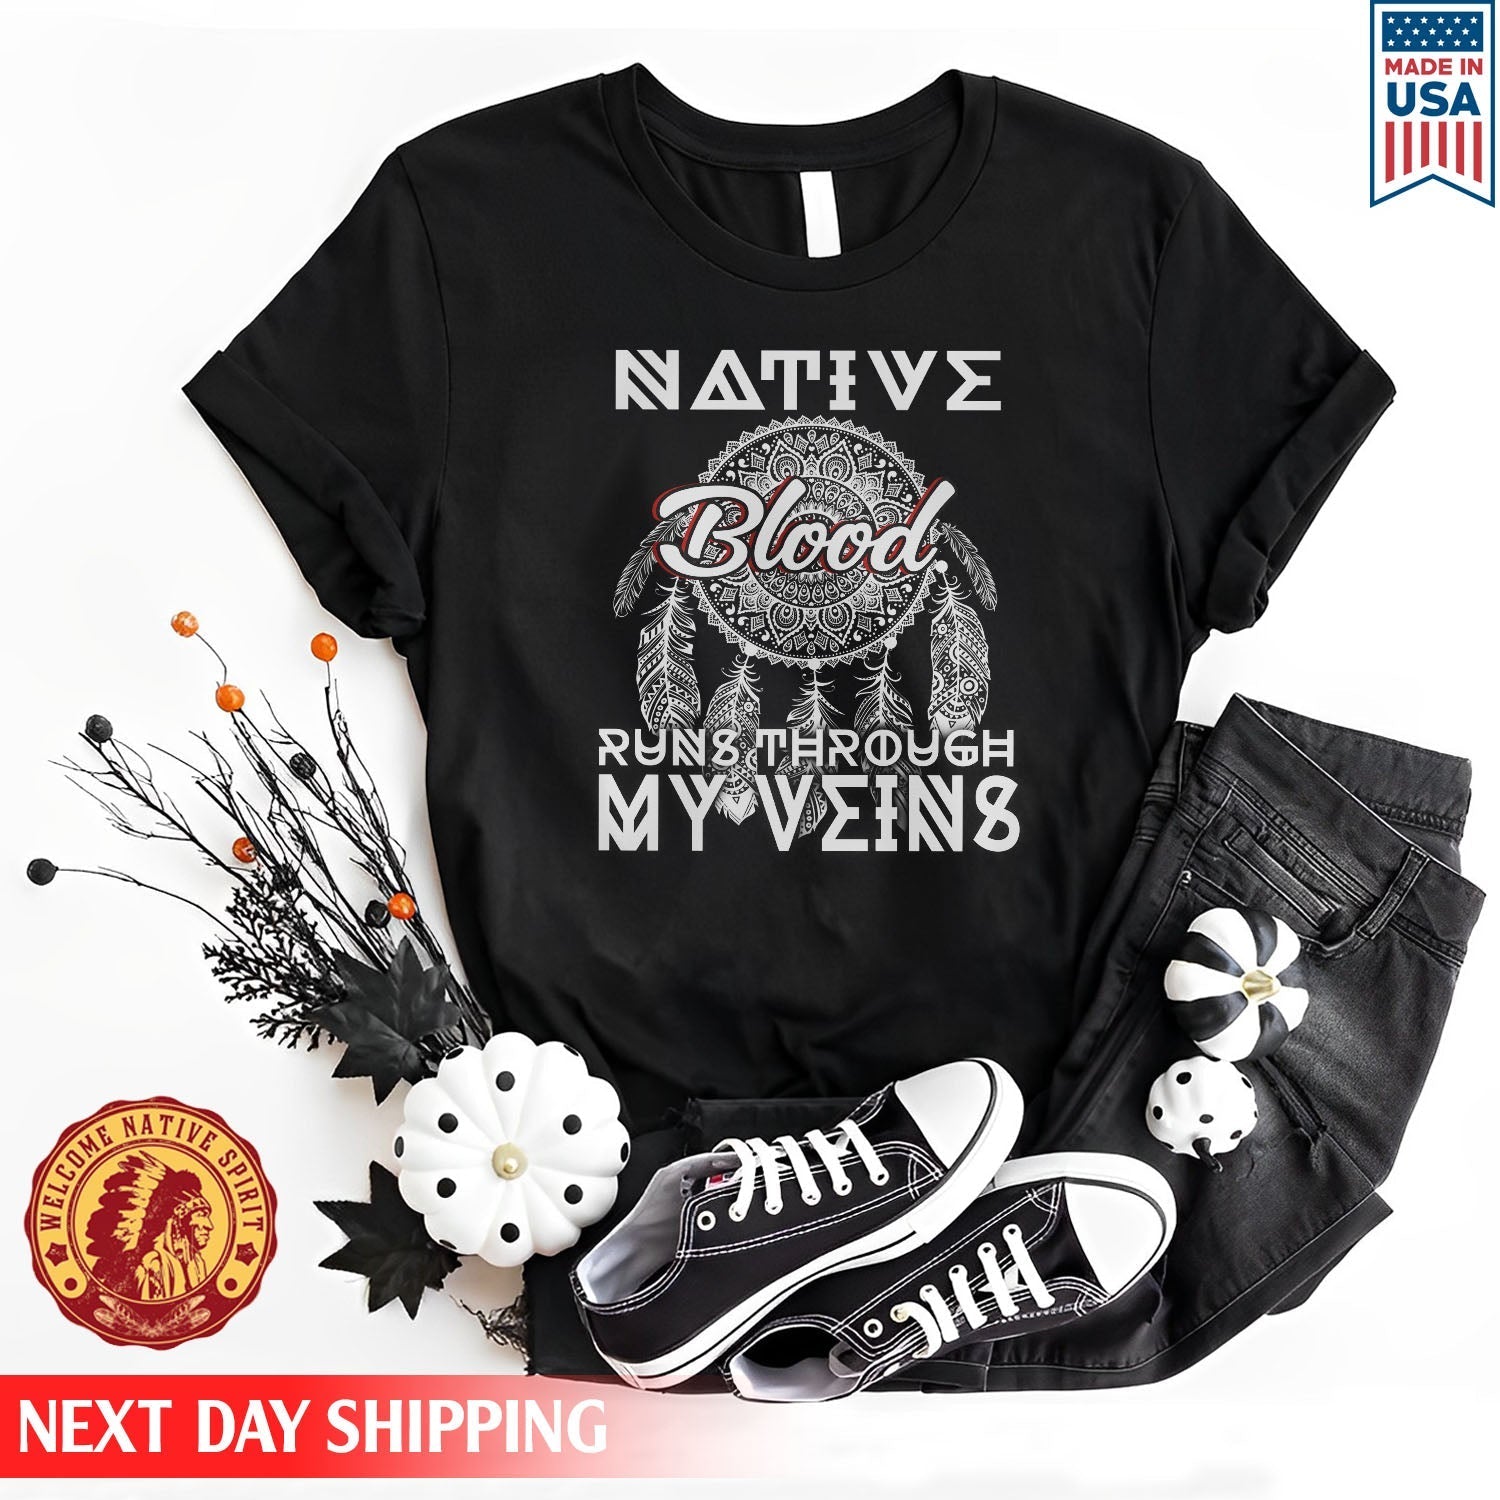 Native American Native Blood Runs Through My Veins Unisex T-Shirt/Hoodie/Sweatshirt